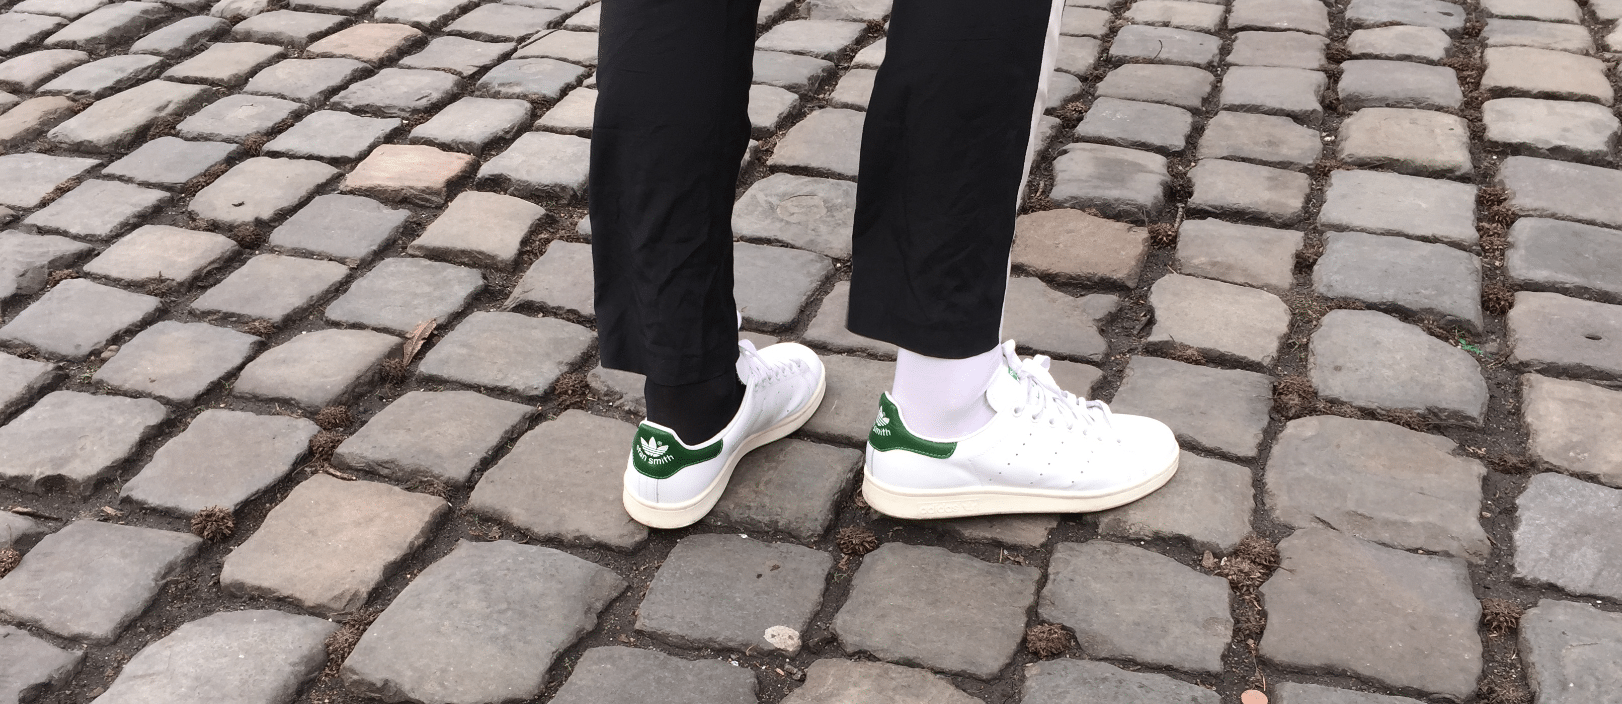 Autonoom tegenkomen Absoluut Welke kleur sokken in je witte sneakers - LovestoHAVE